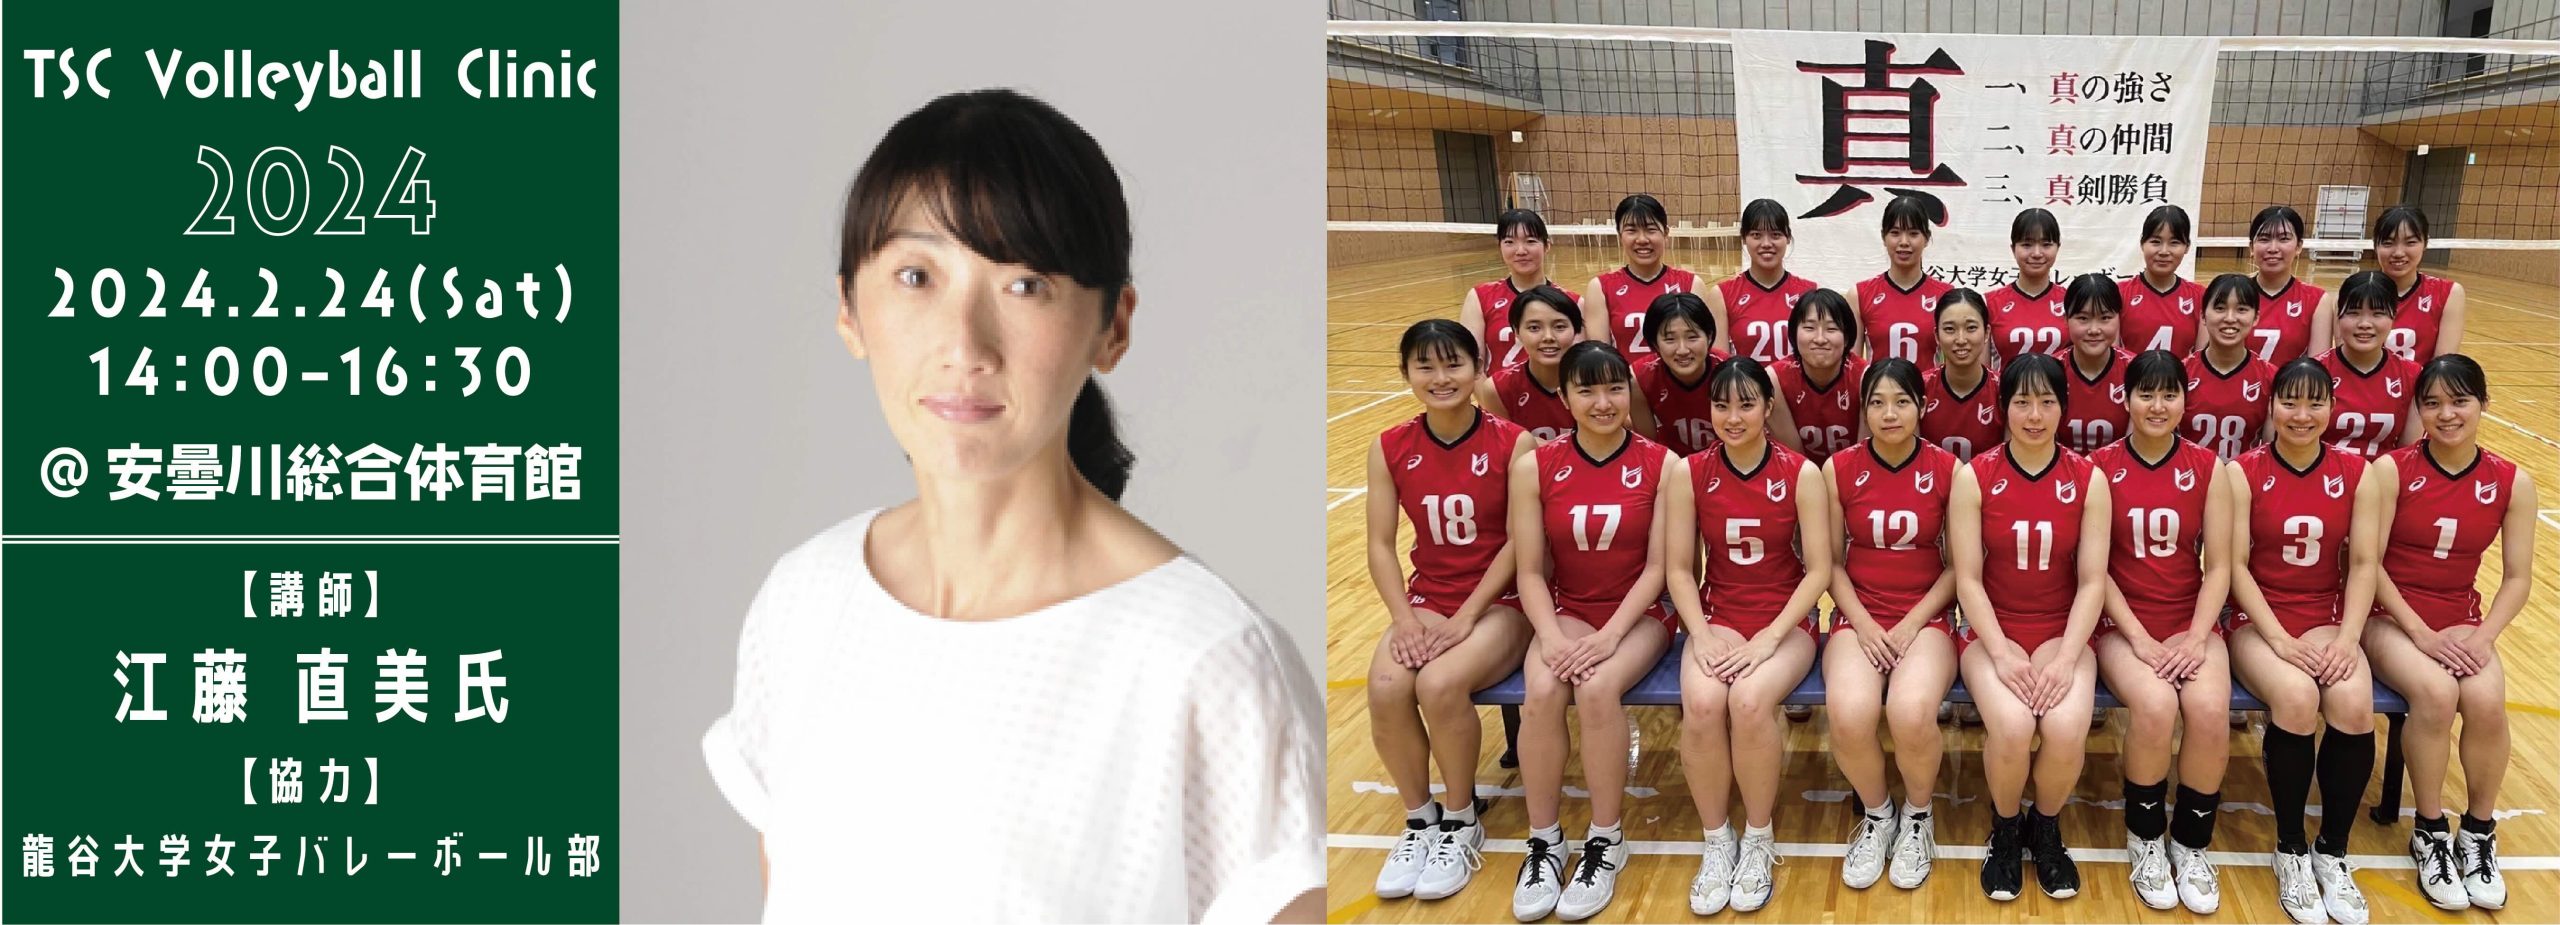 【バレーボール元全日本女子代表】江藤 直美氏 TSC Volleyball Clinic 2024